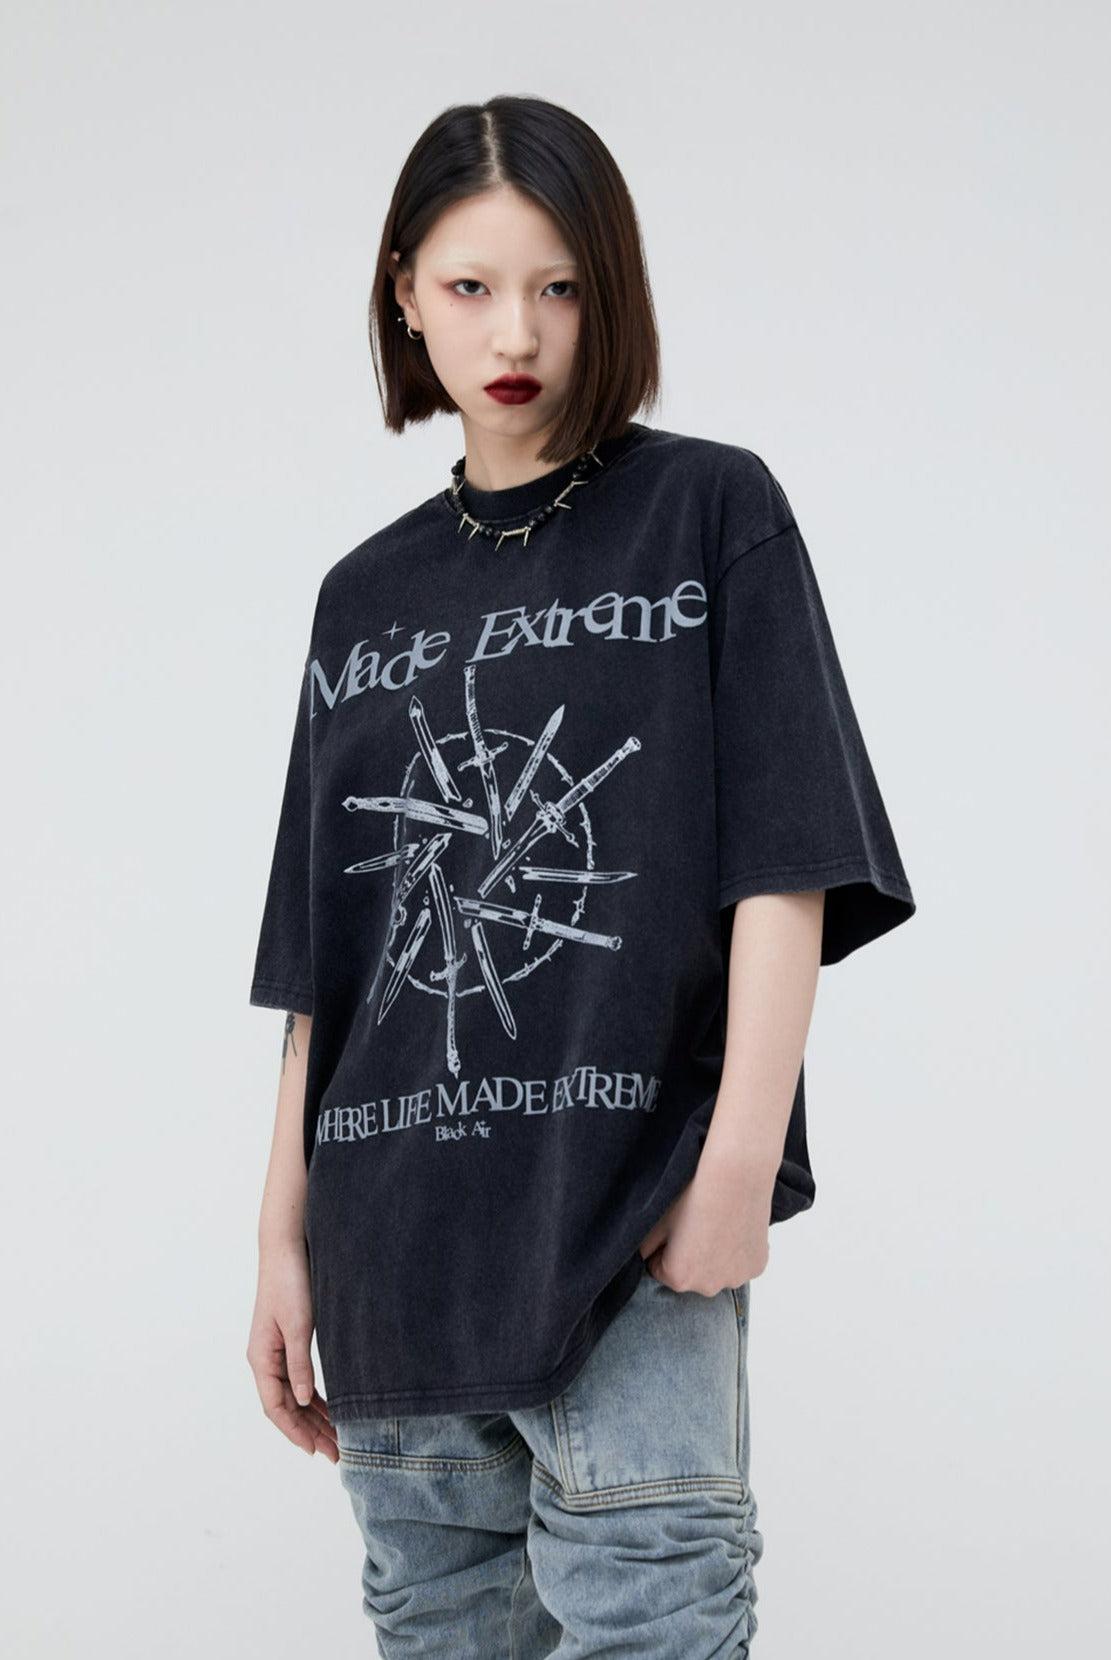 Sword Art T-Shirt Korean Street Fashion T-Shirt By Made Extreme Shop Online at OH Vault